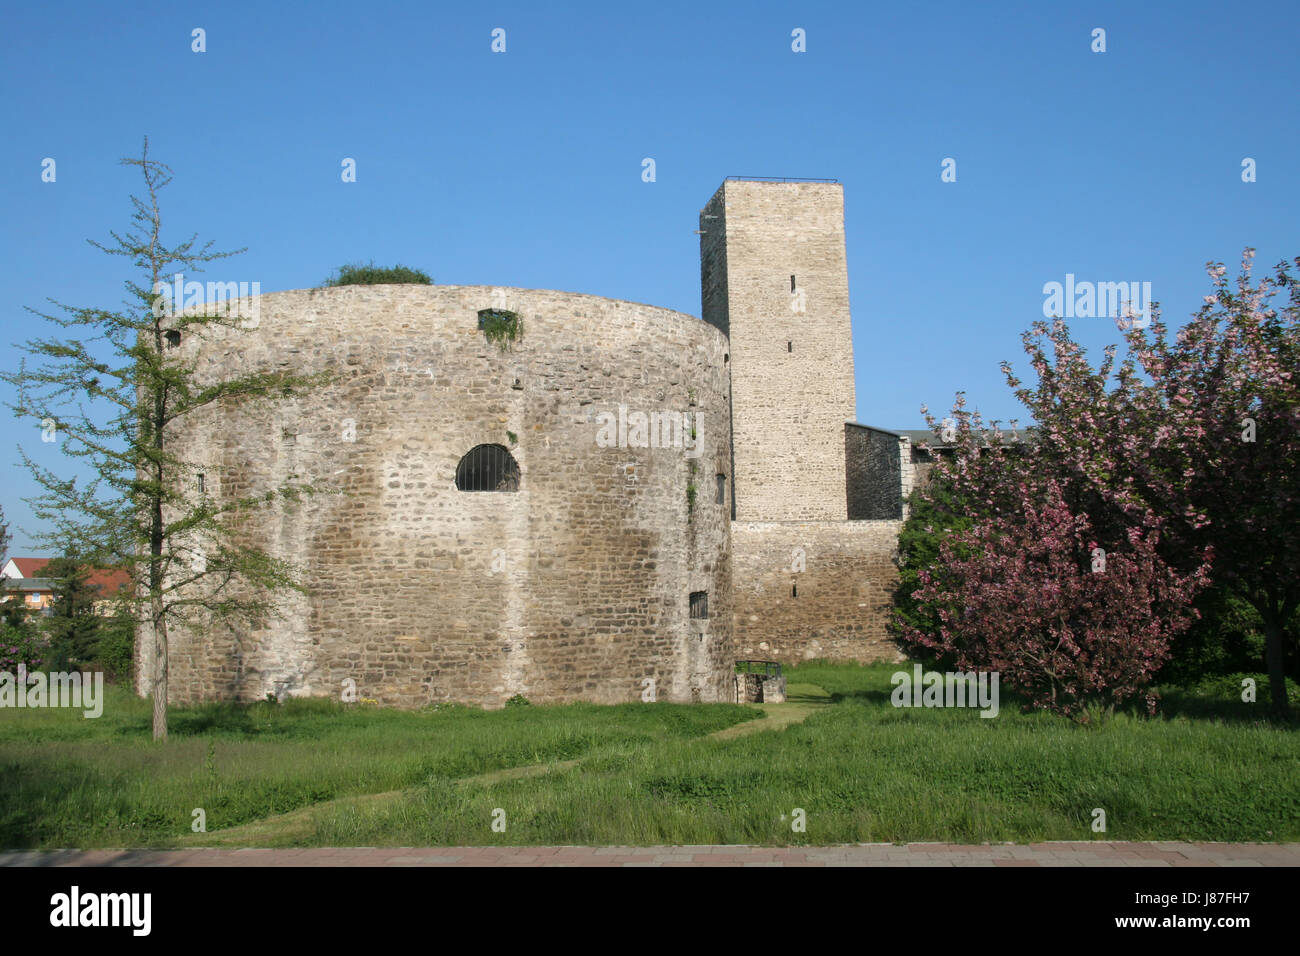 wall, city wall, mining, tower, tree, trees, stone, wall, observation, sight, Stock Photo